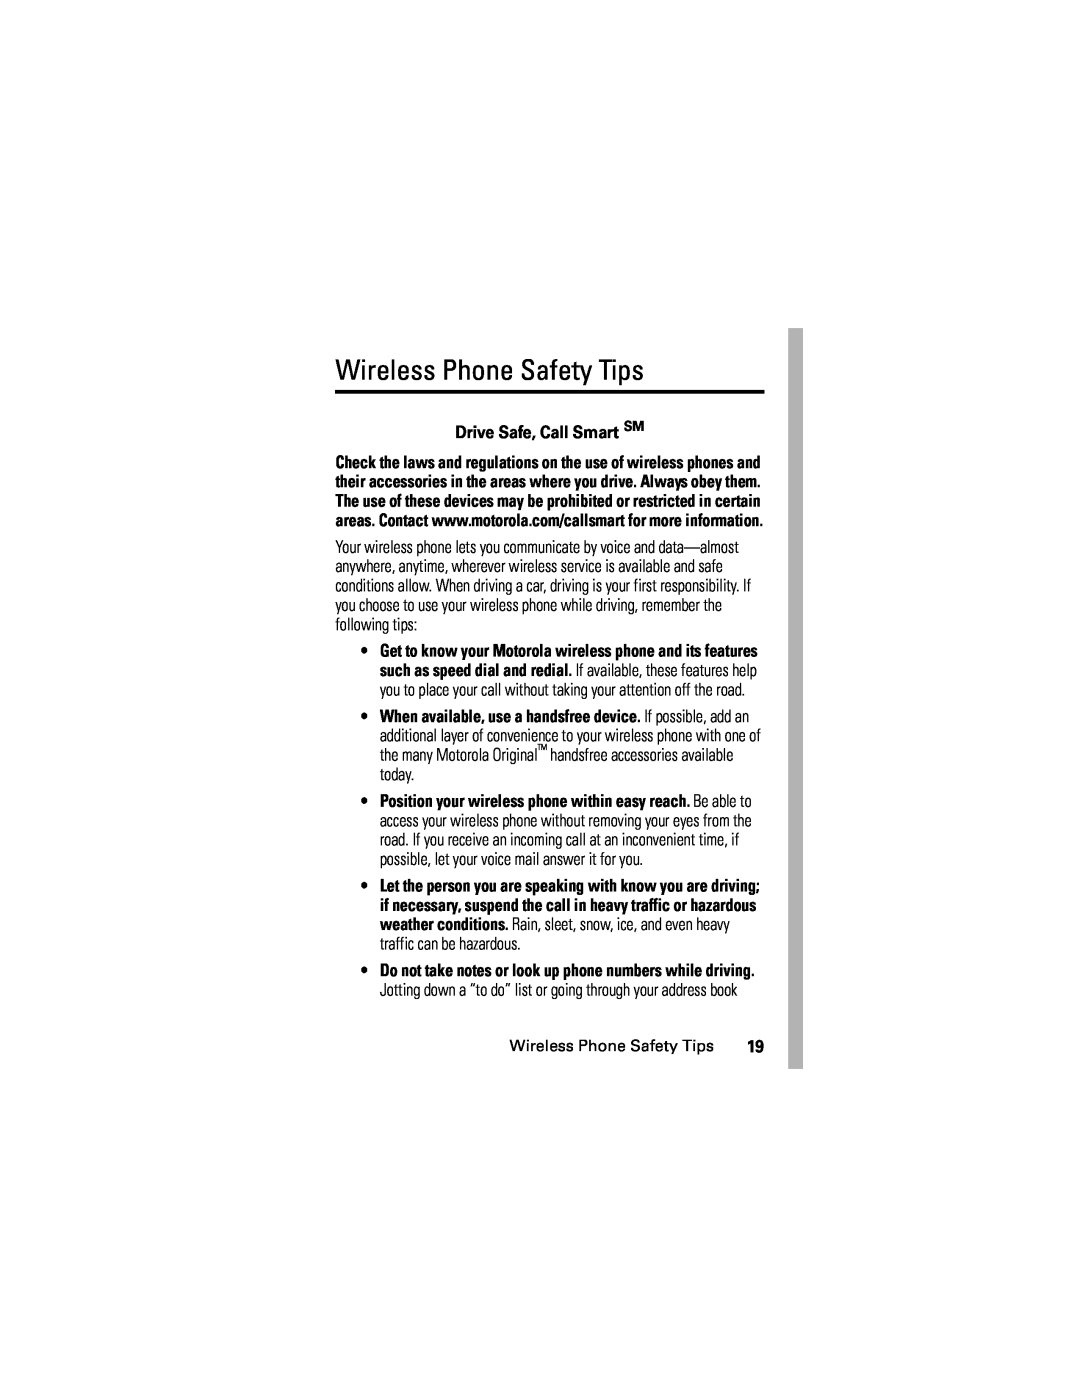 Motorola V635 manual Wireless Phone Safety Tips, Drive Safe, Call Smart SM 